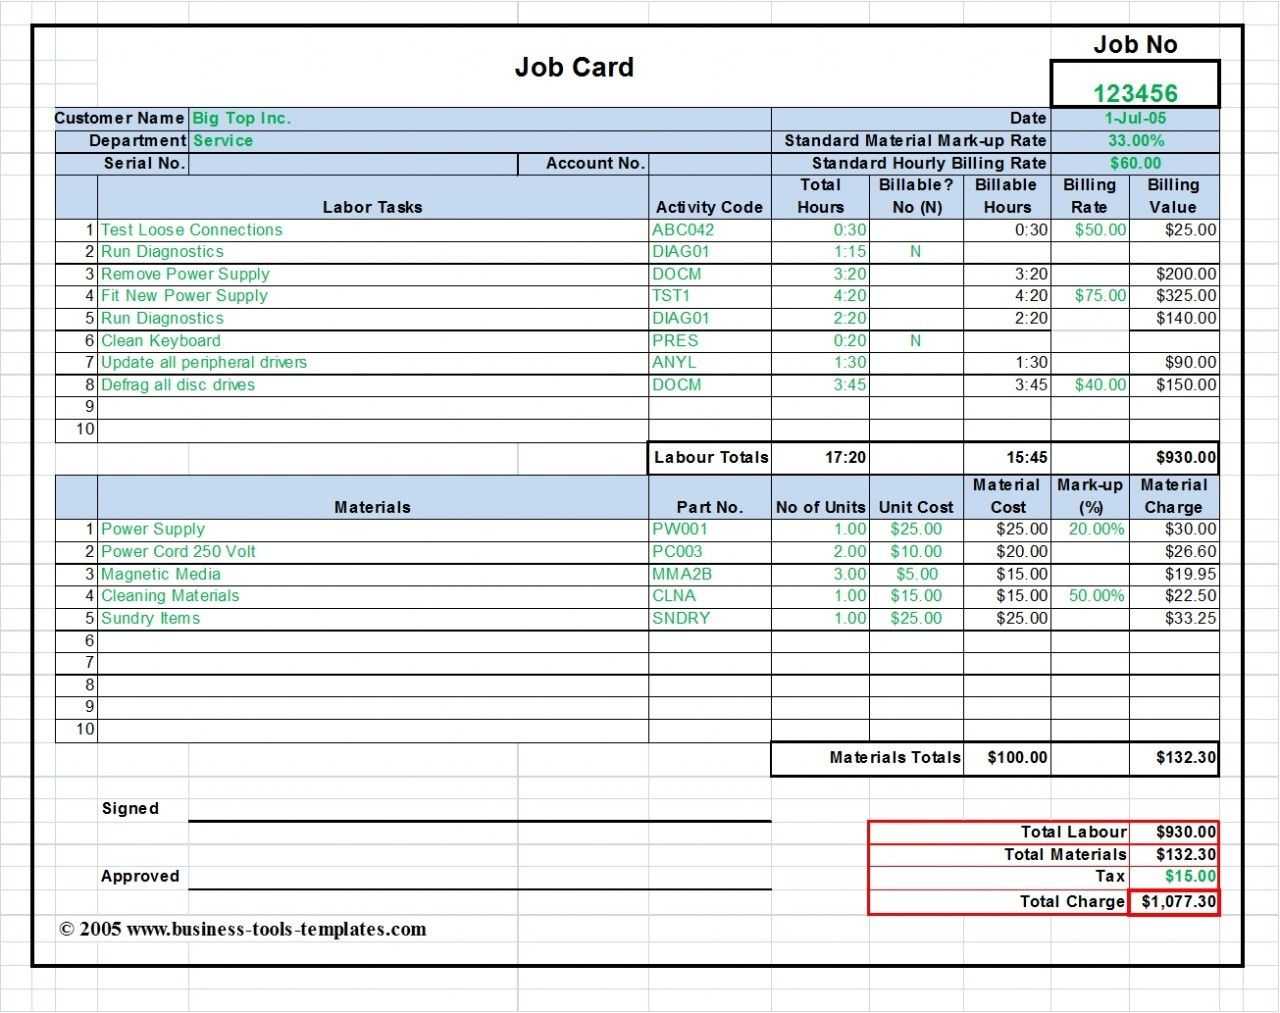 Workshop Job Card Template Excel, Labor & Material Cost Inside Mechanic Job Card Template